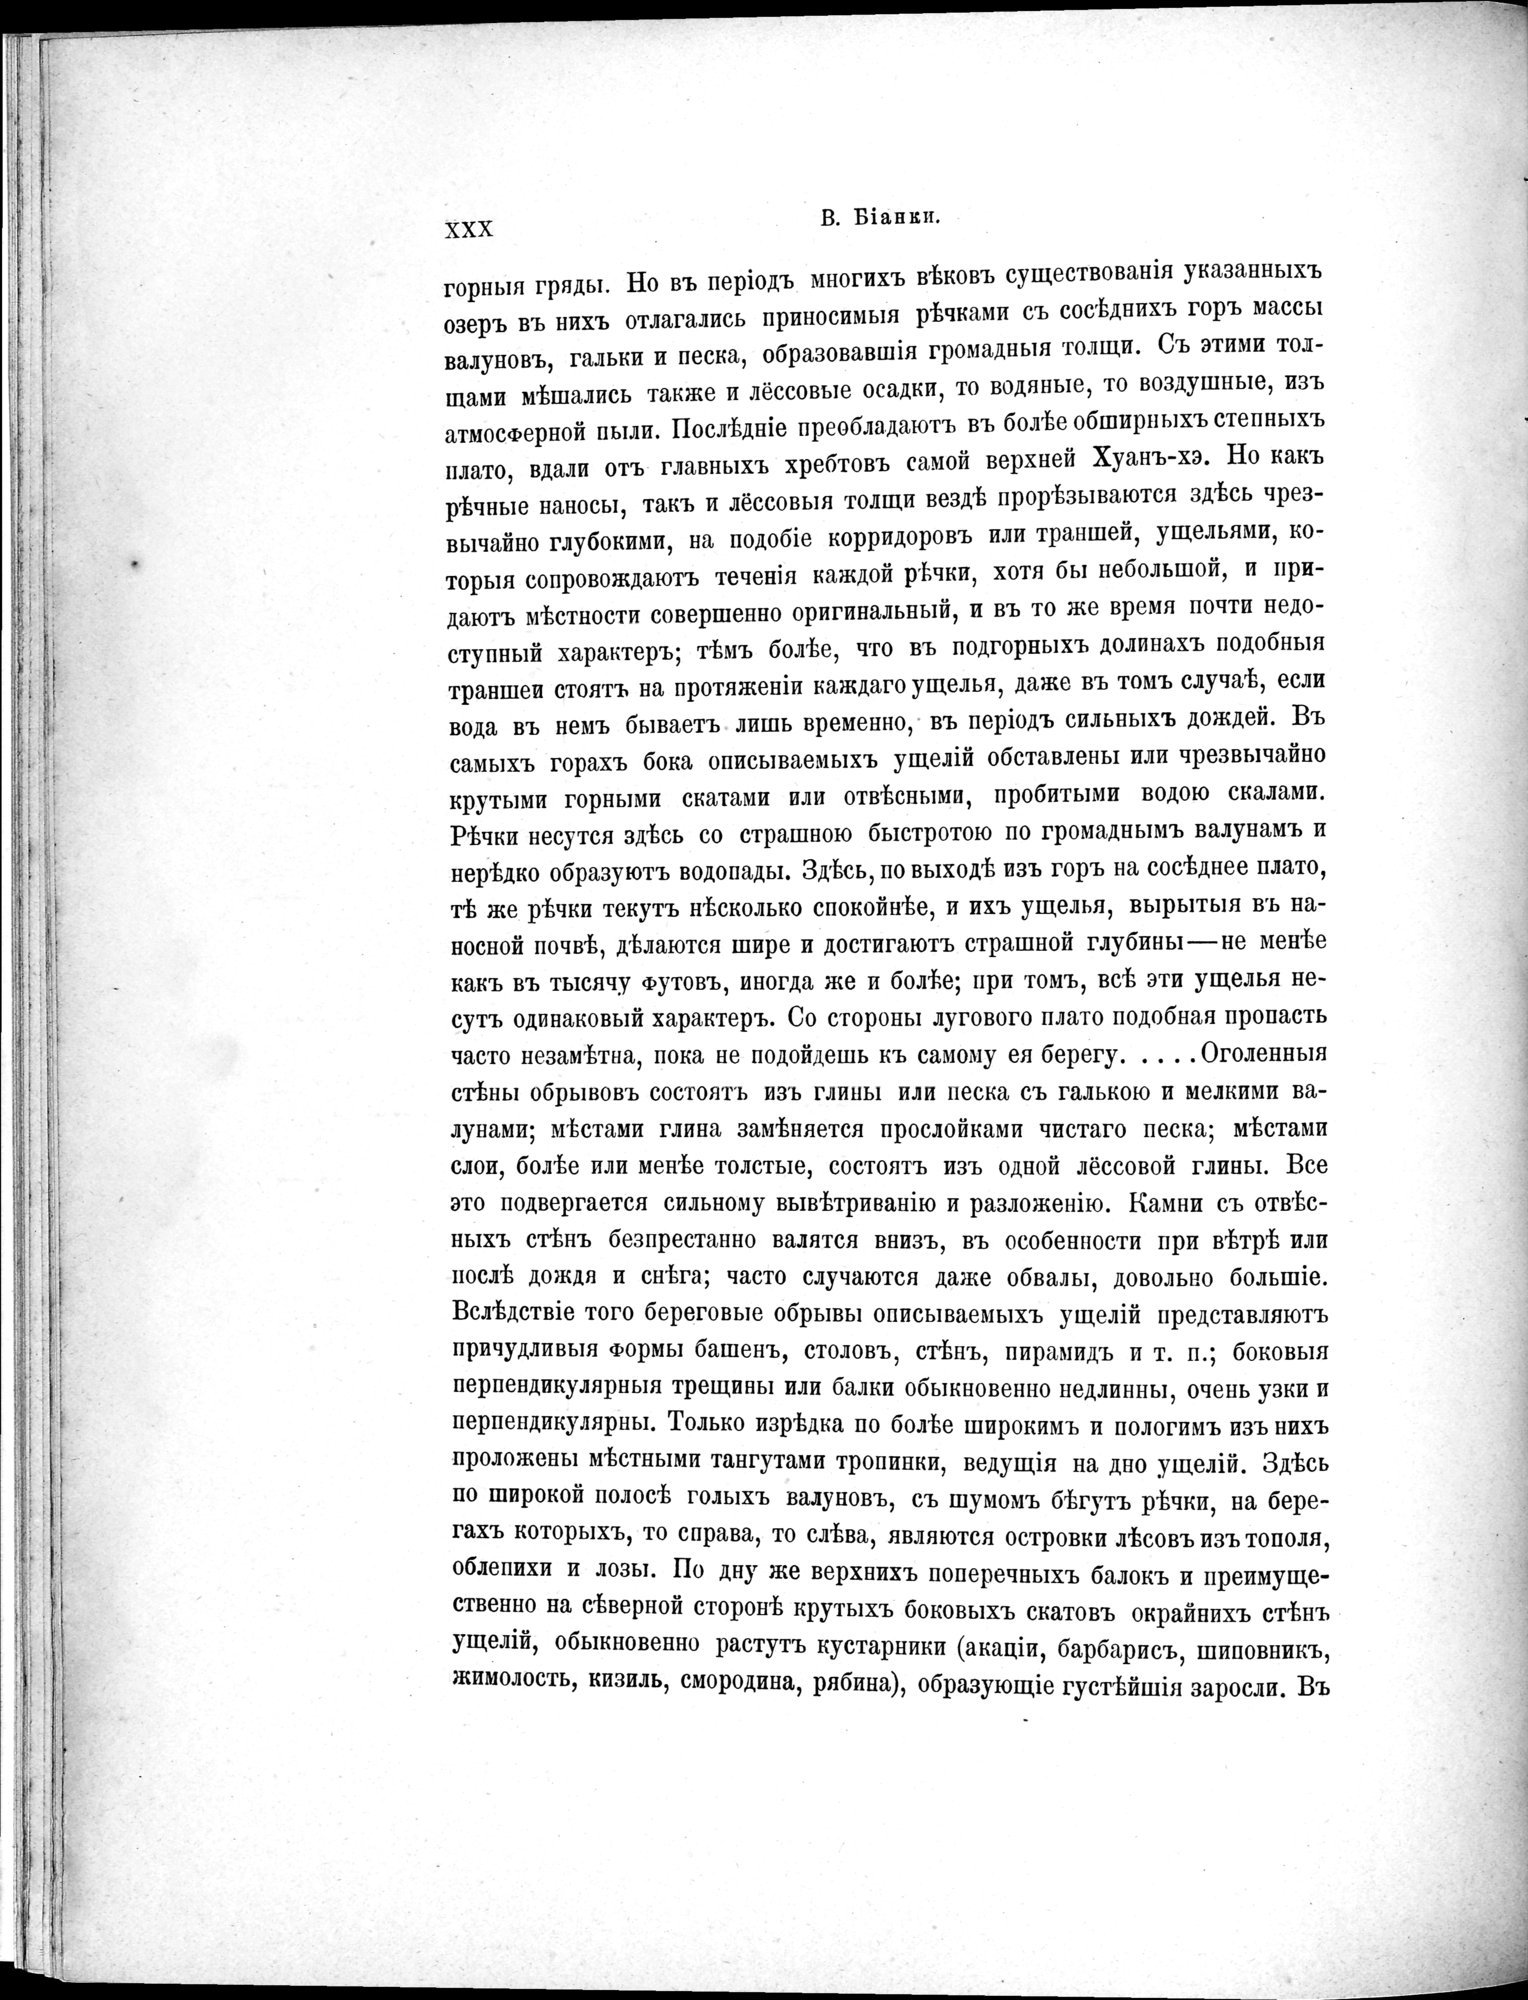 Mongoliia i Kam : vol.5 / Page 44 (Grayscale High Resolution Image)